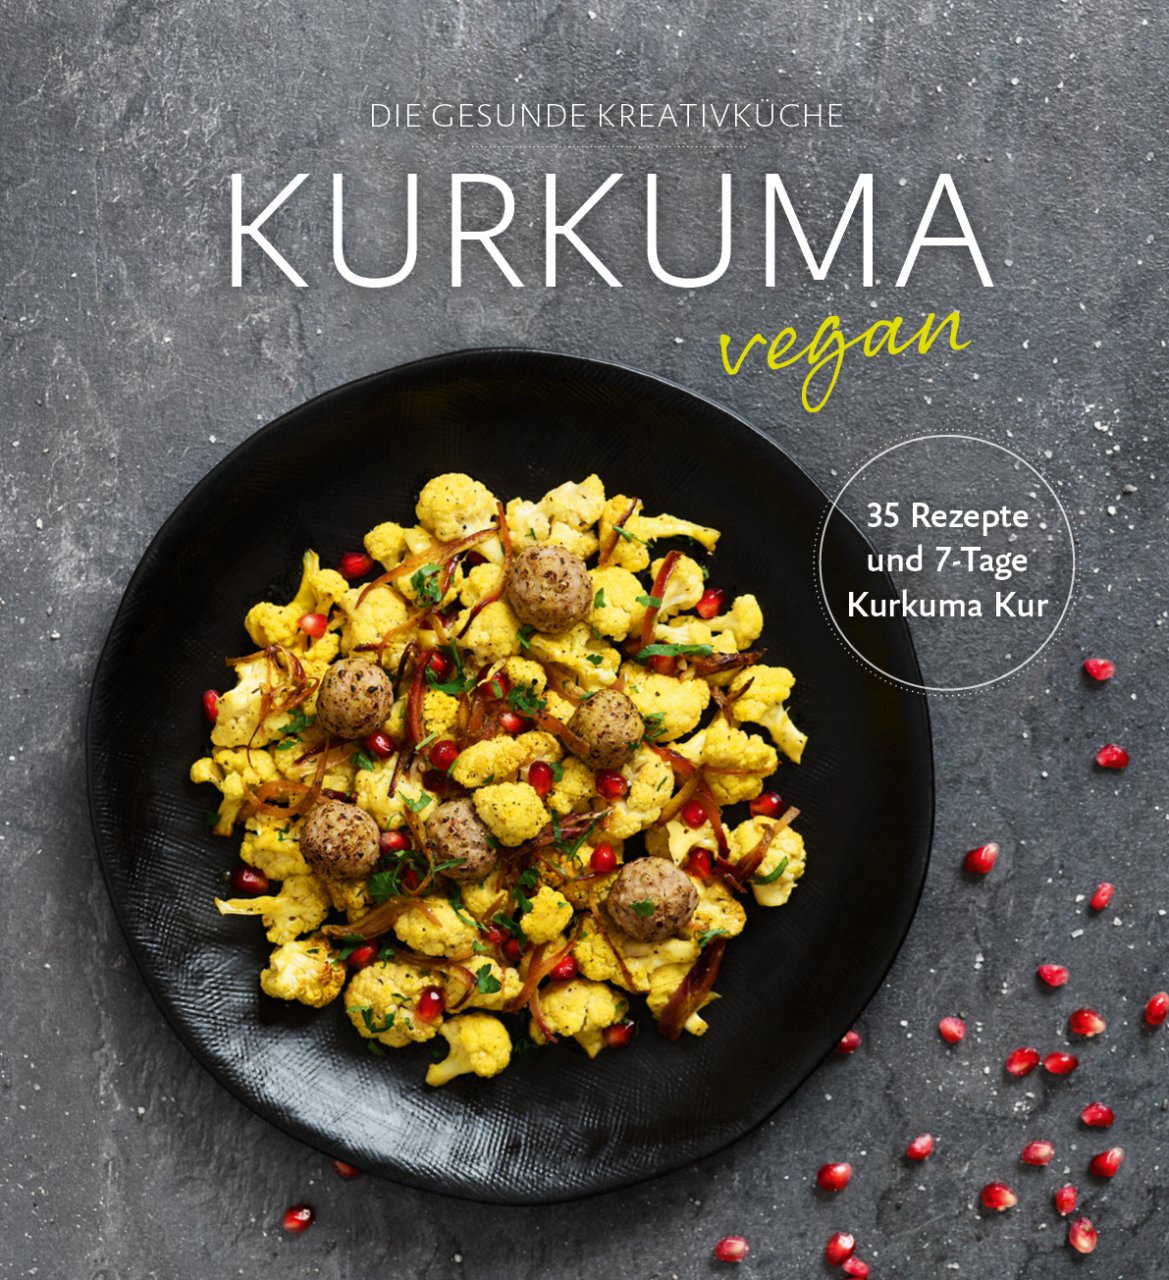 Das Kurkuma-Kochbuch